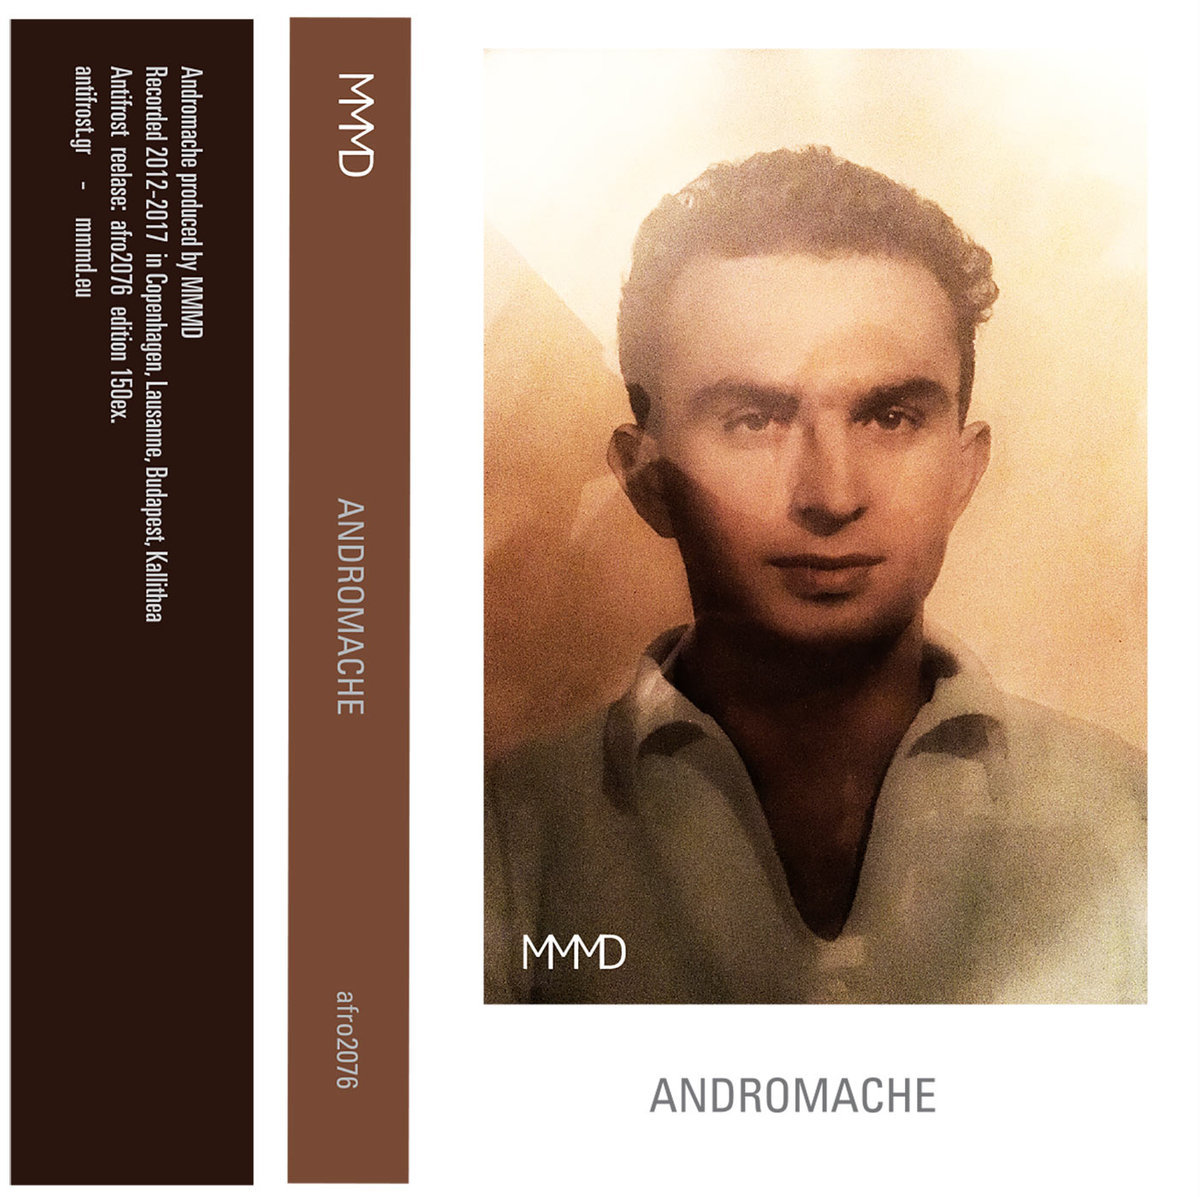 MMMD – Andromache